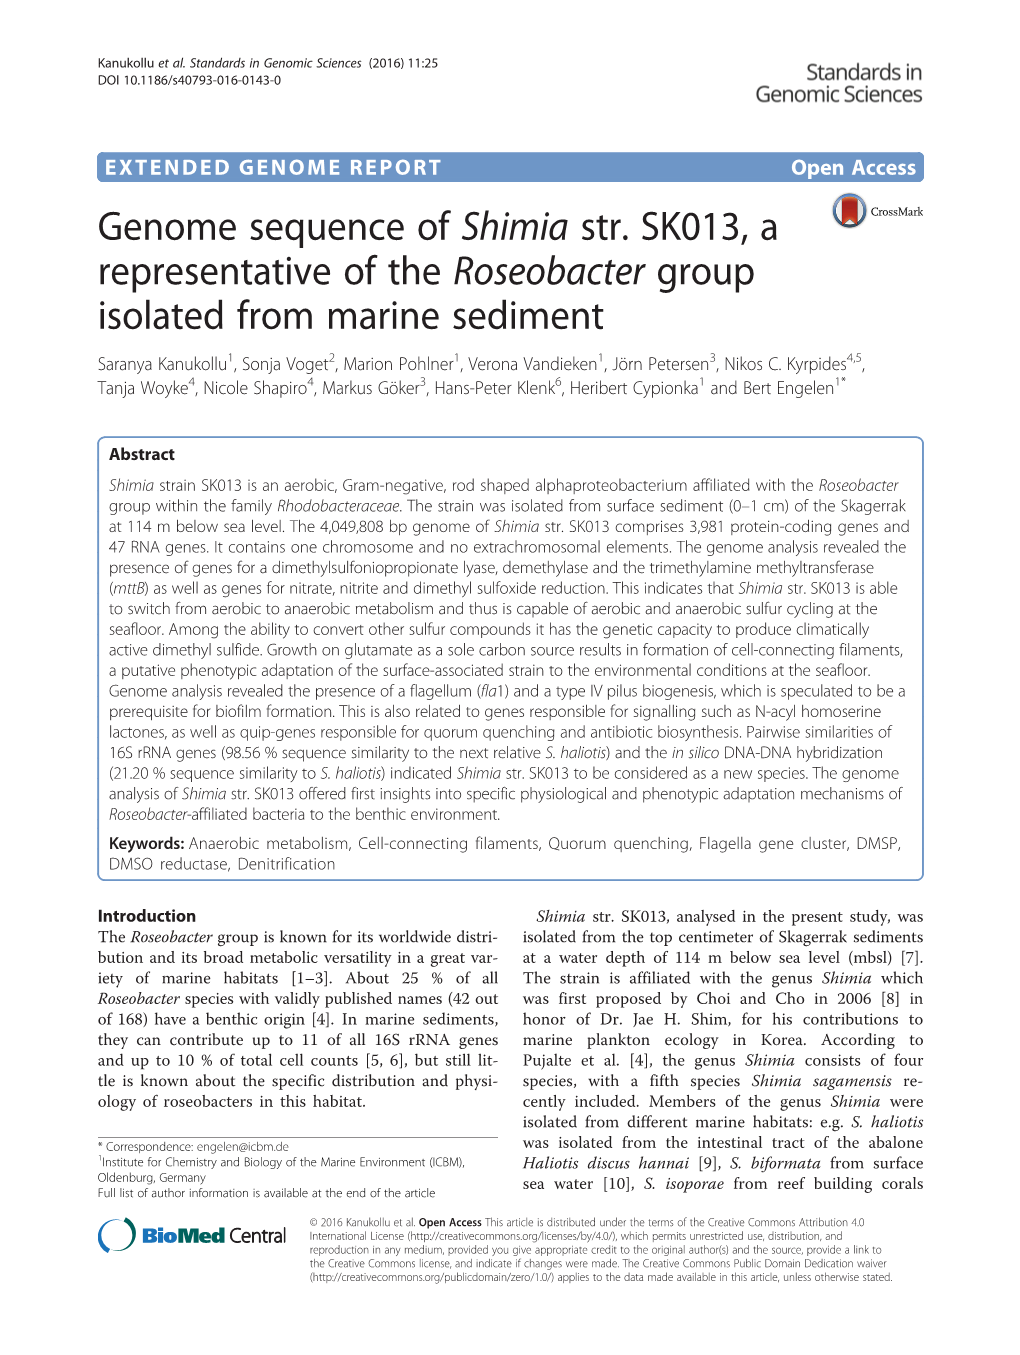 Genome Sequence of Shimia Str. SK013, a Representative of The